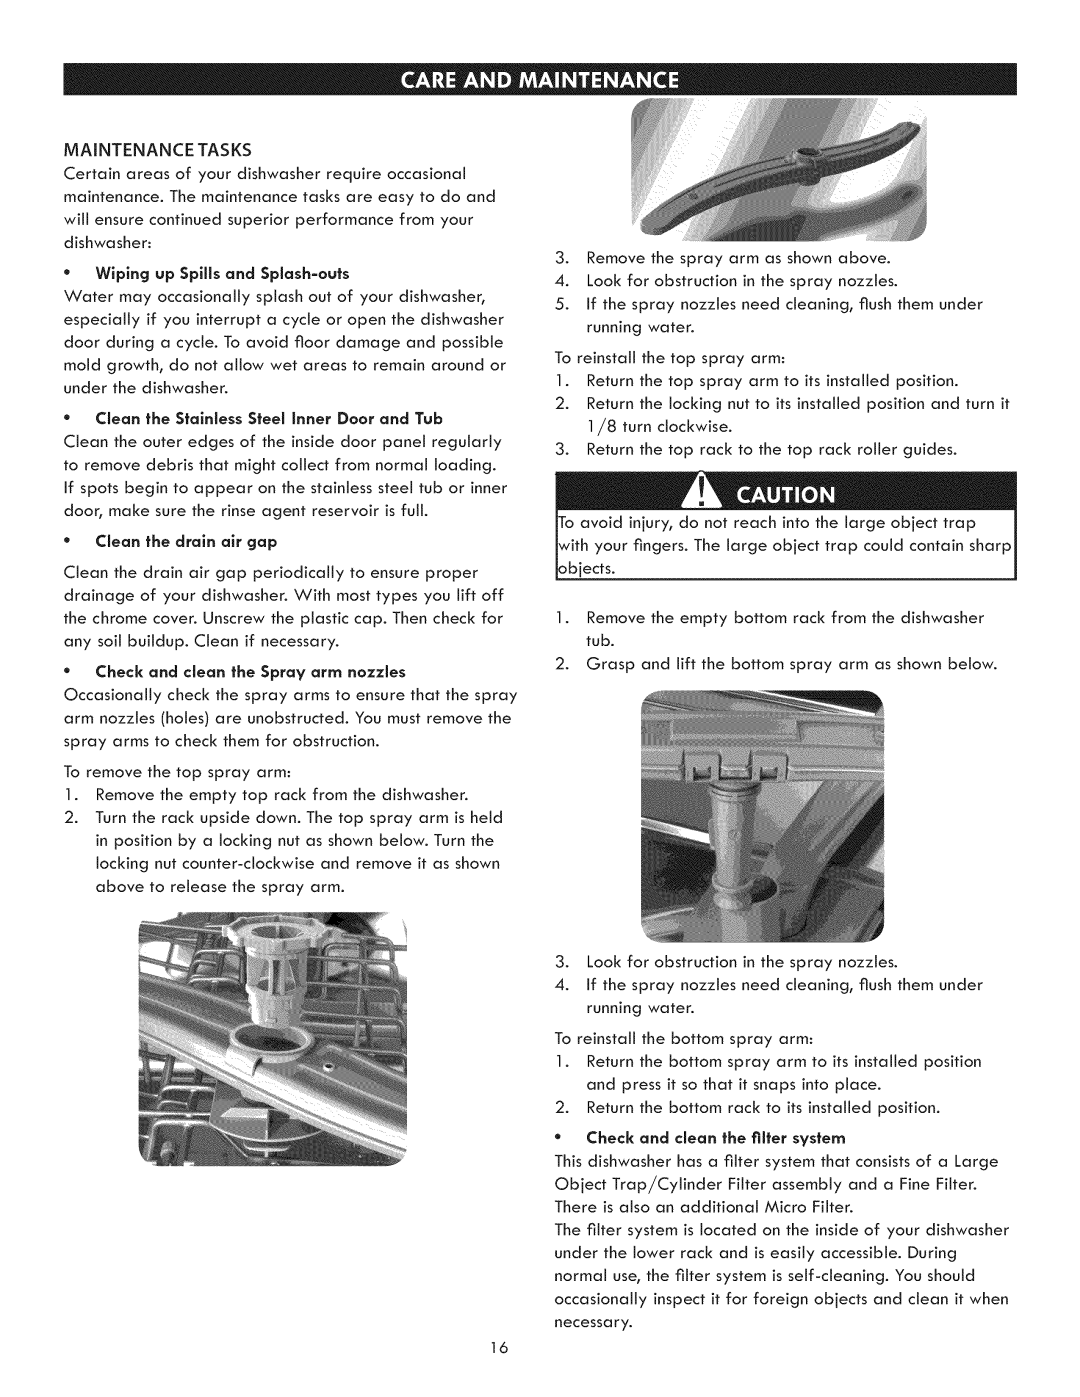 Kenmore 630.1395 manual Clean the Stainless Steel Inner Door and Tub, Clean the drain air gap 